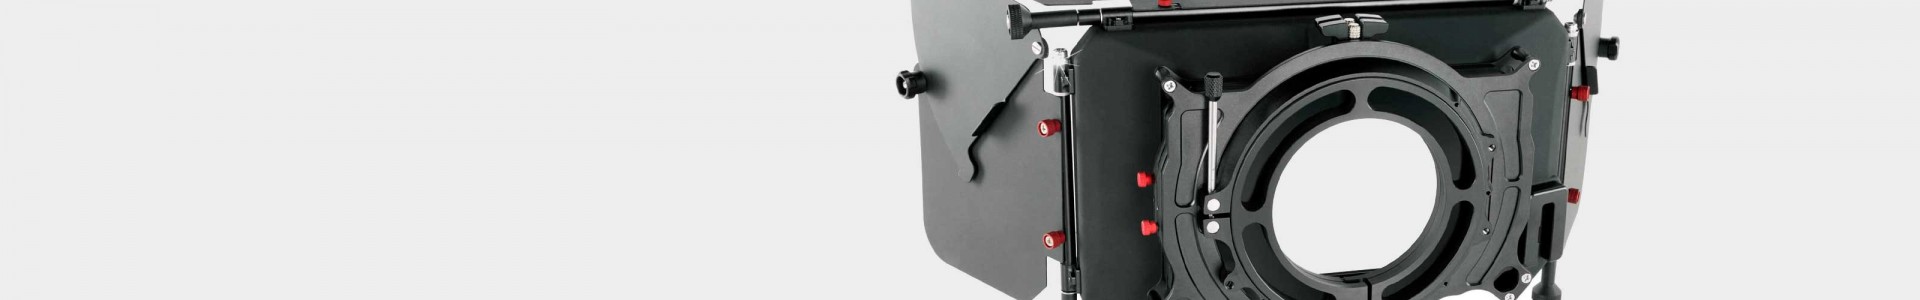 Professional Matte-Box for Cinema or Photo lenses - Avacab